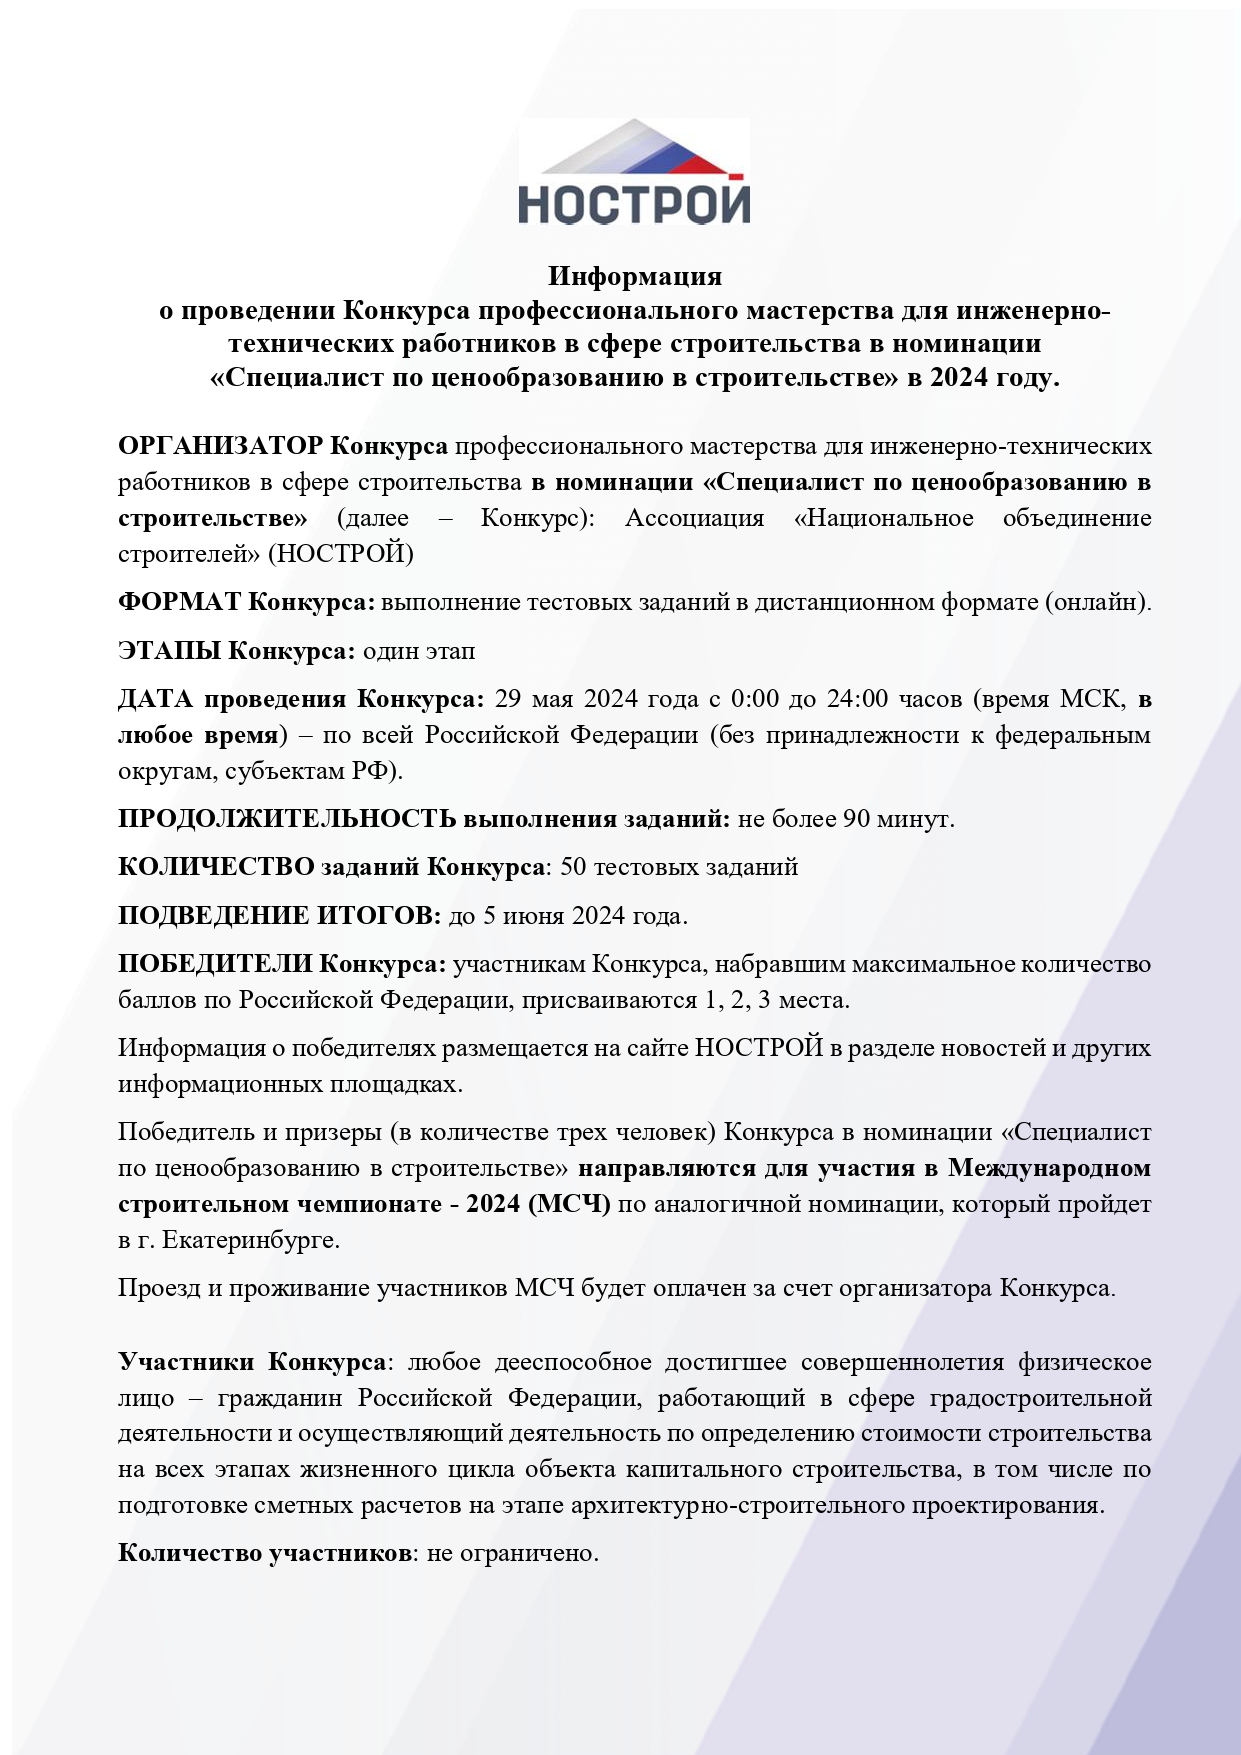 informaciya_po_konkursu_page-0001.jpg